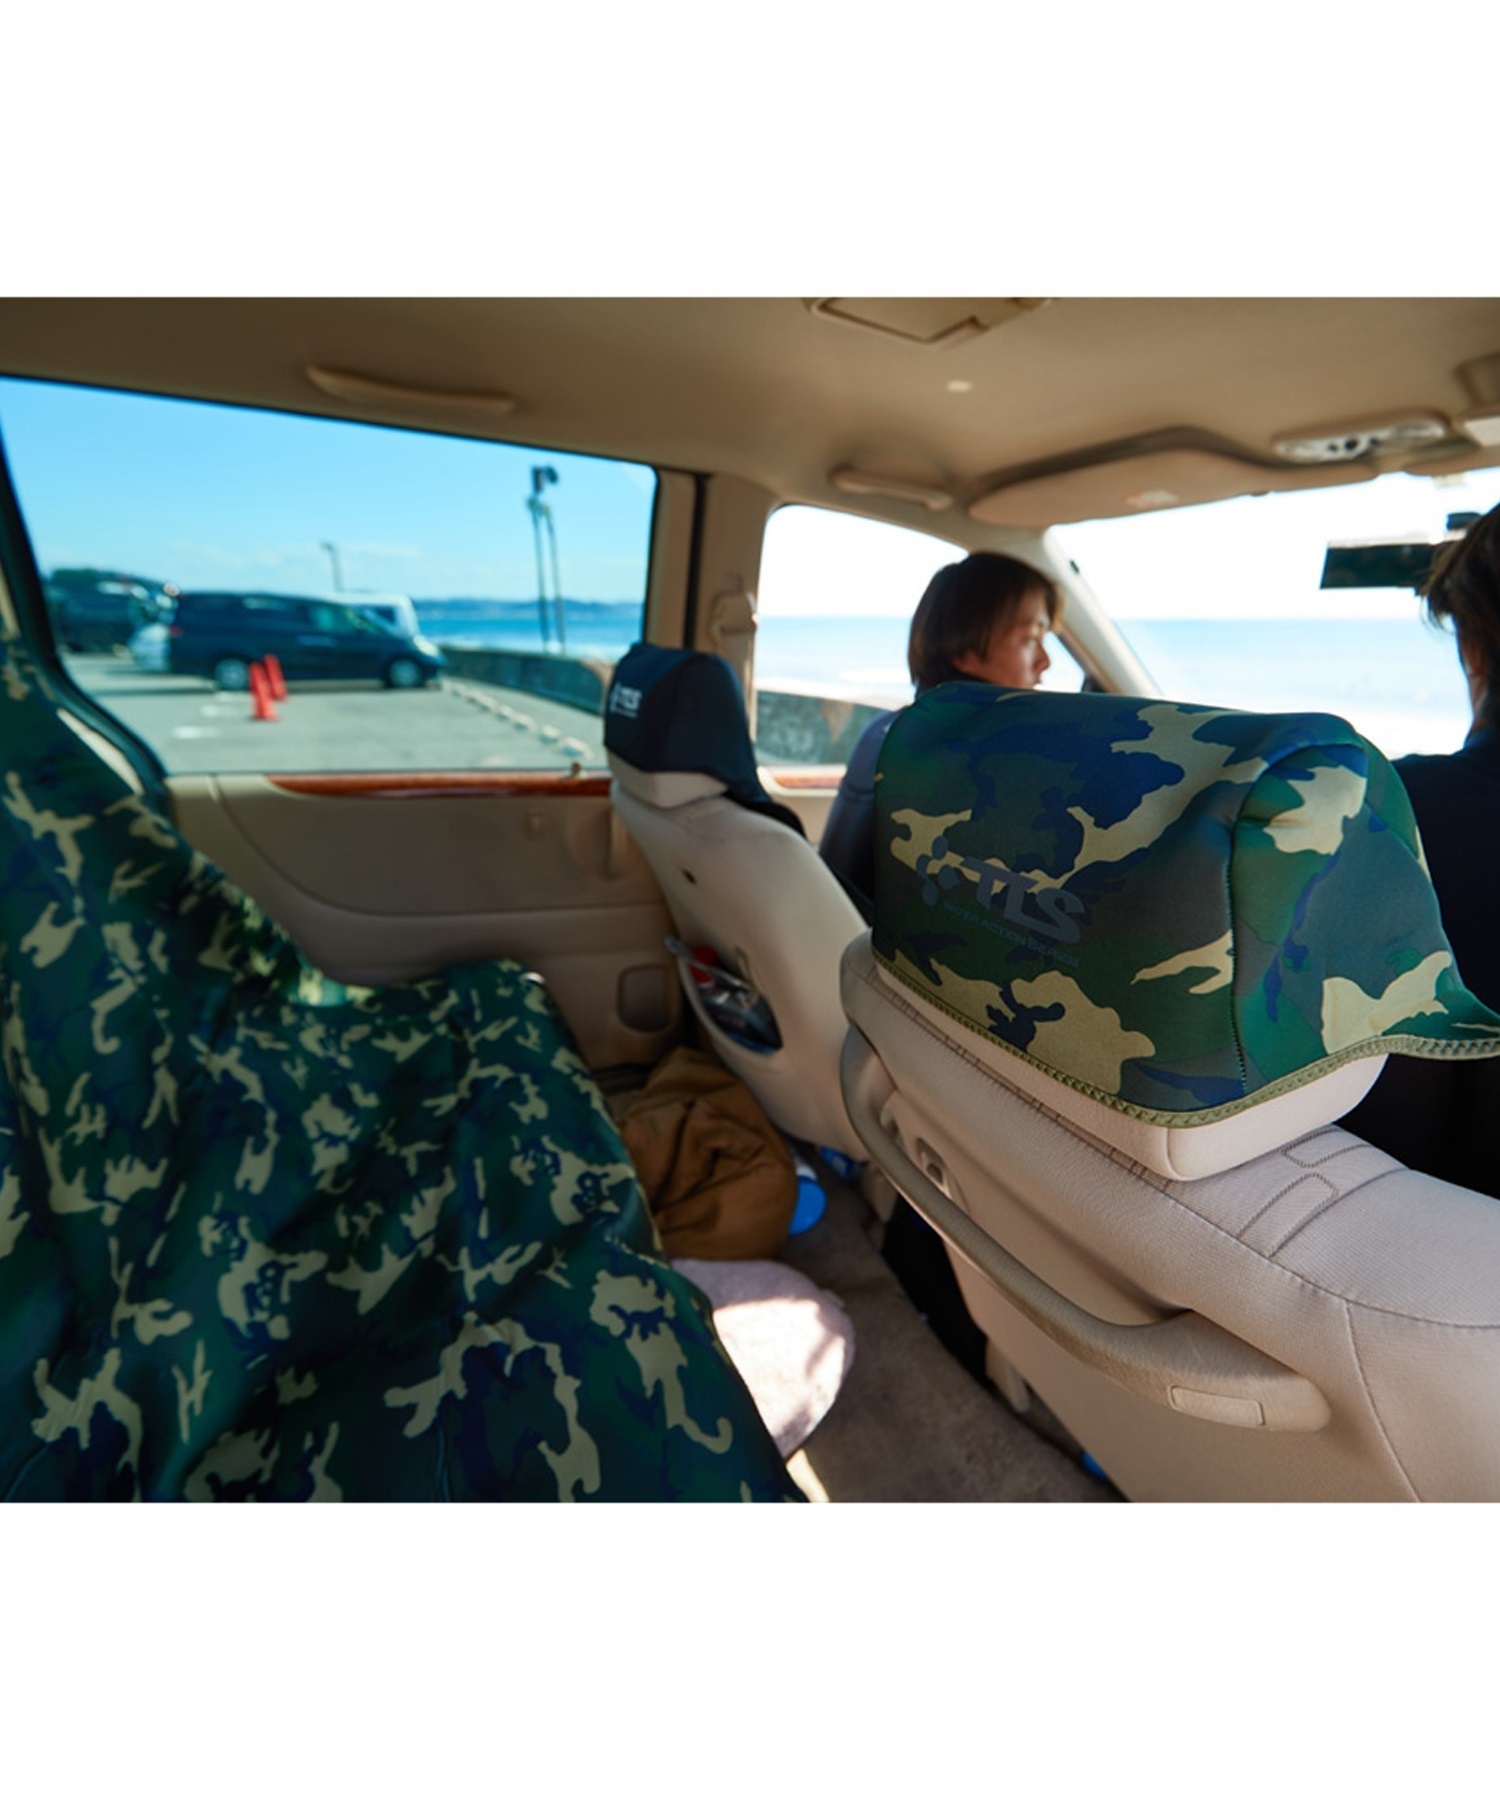 TOOLS トゥールス CAR SEAT COVER シートカバー サーフィン 車用品 座席用 ムラサキスポーツ(GRNCM-ONESIZE)